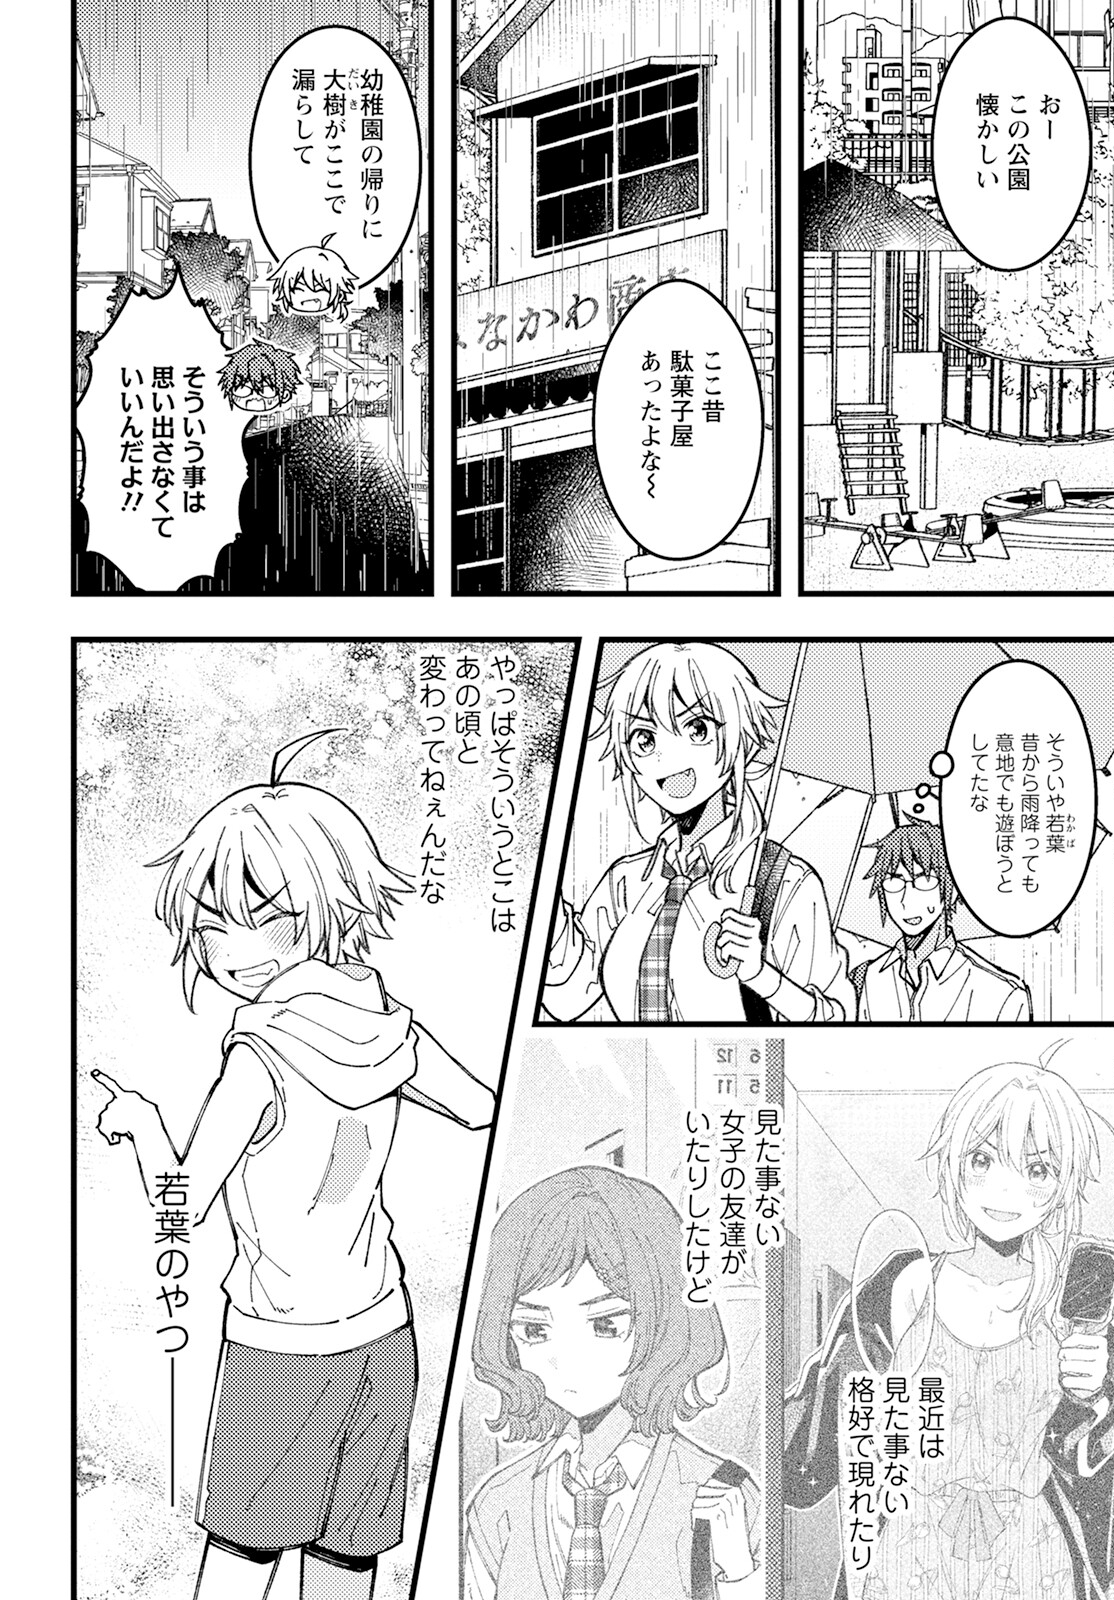 Wakaba-chan wa Wakarasetai - Chapter 9 - Page 2